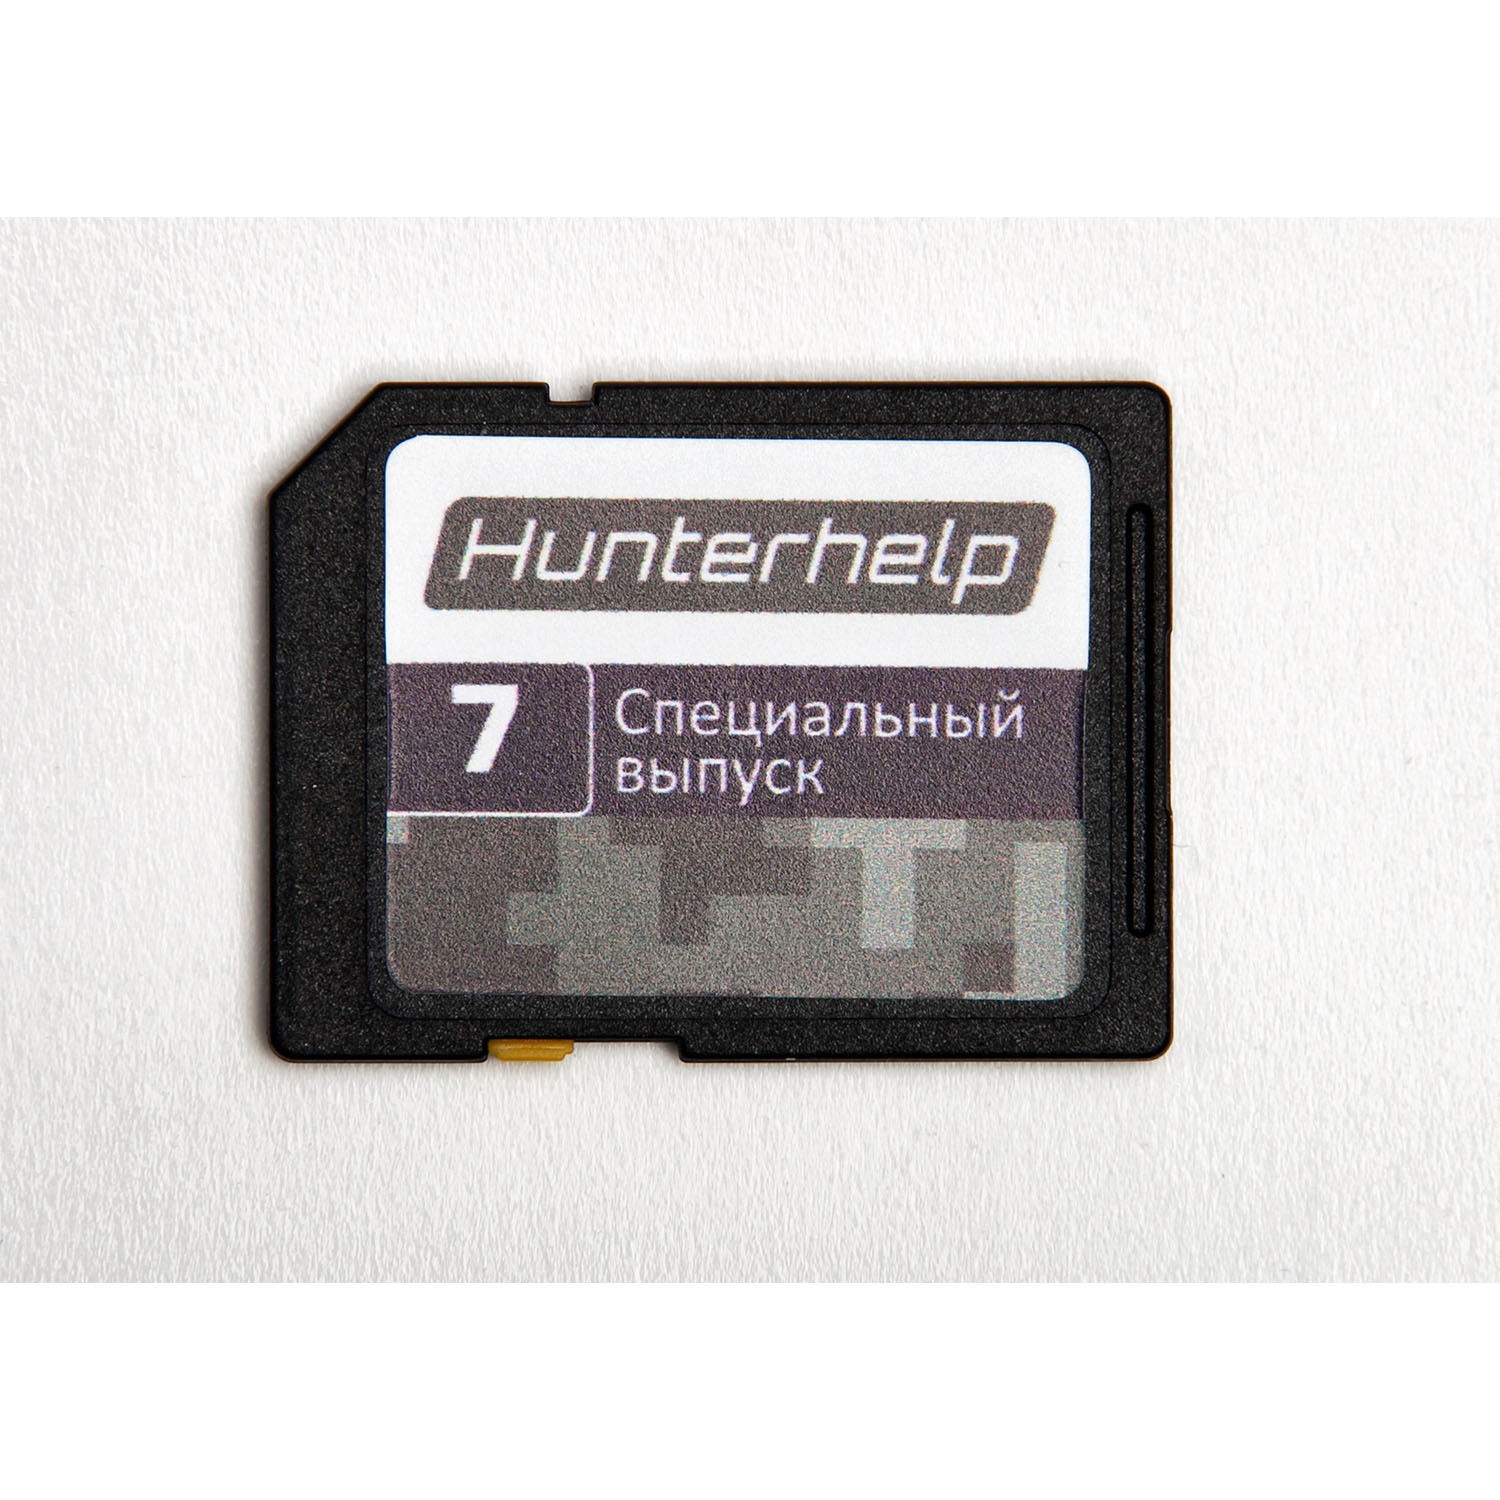 Электроманок Hunterhelp Master-3M, фонотека №1,2,3,4,5,6,8 на выбор, динамик ALFA